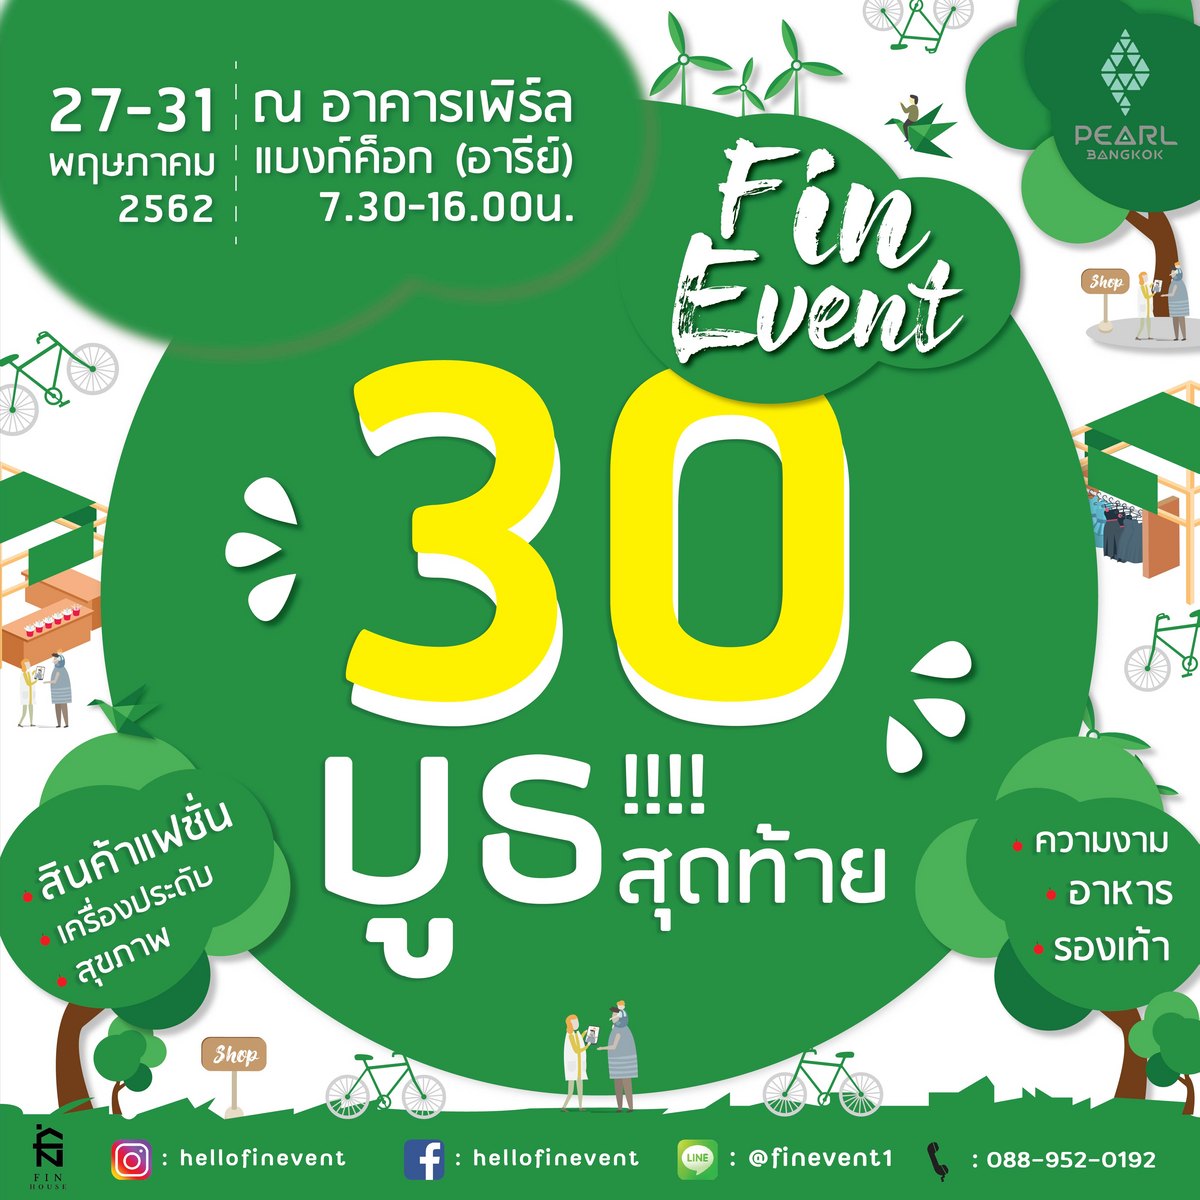 Fin Event @Pearl Bangkok (27 - 31 พ.ค. 2562) Pearl Bangkok